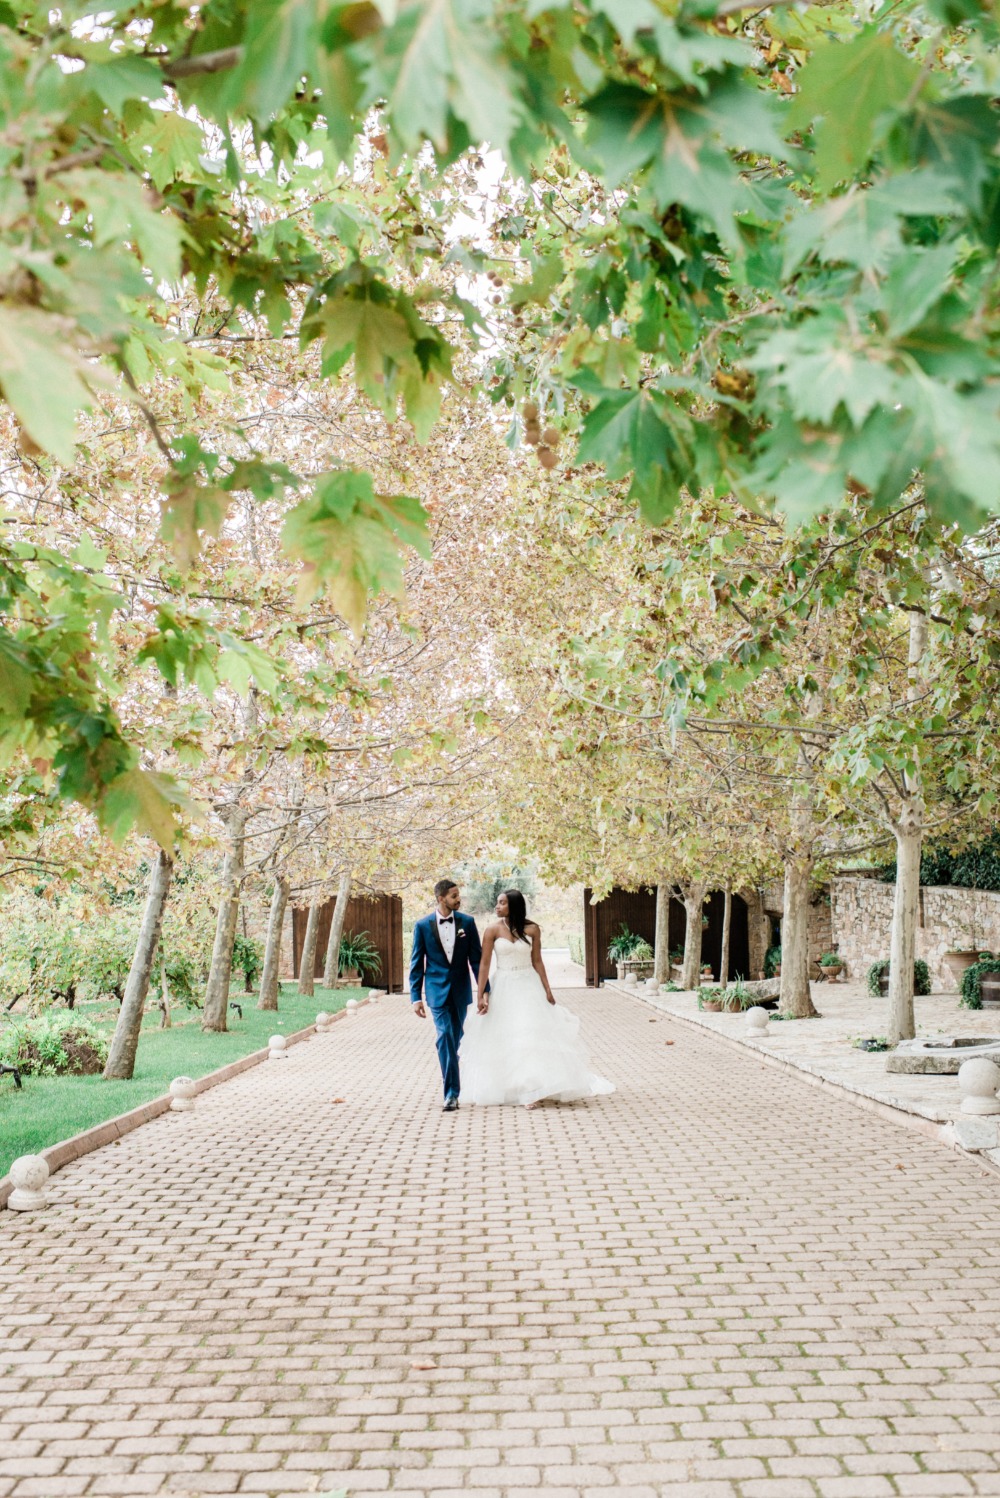 Brenae and Ryan’s Romantic Destination Wedding in Greece gallery image 19